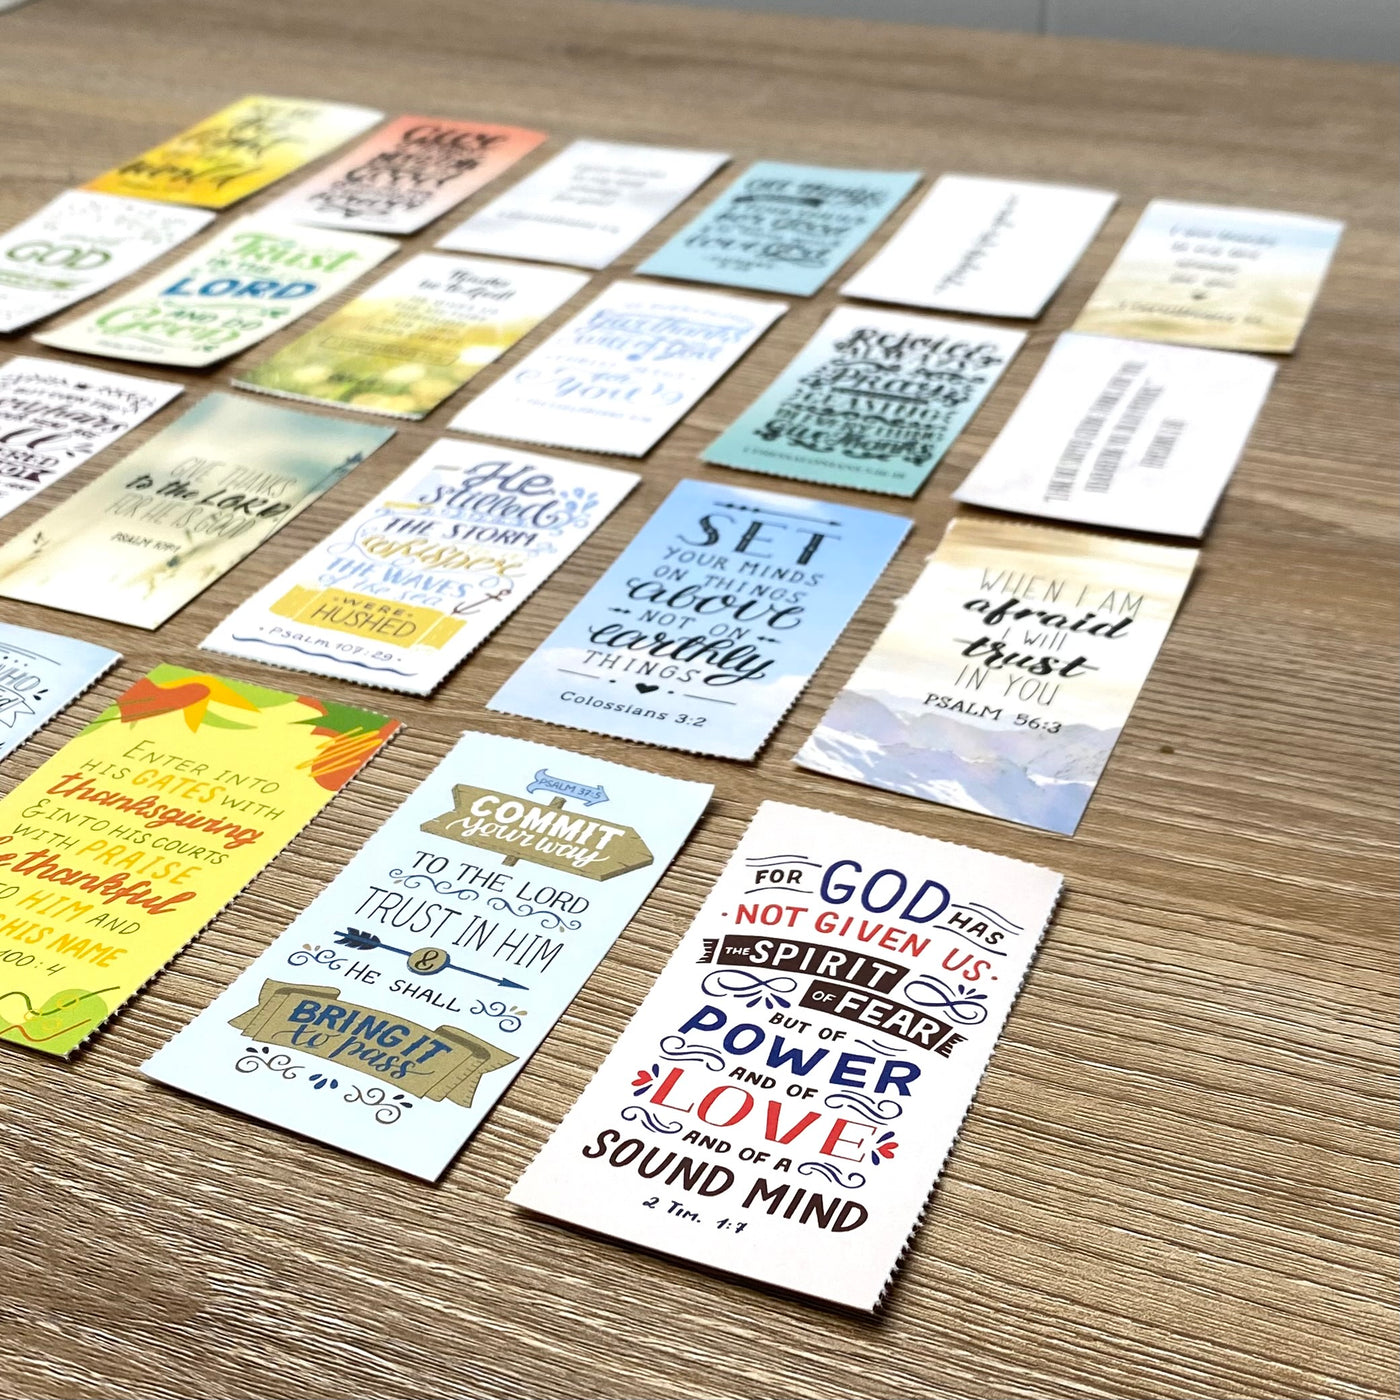 Christian Encouragement Card Set - Scripture Pack 2